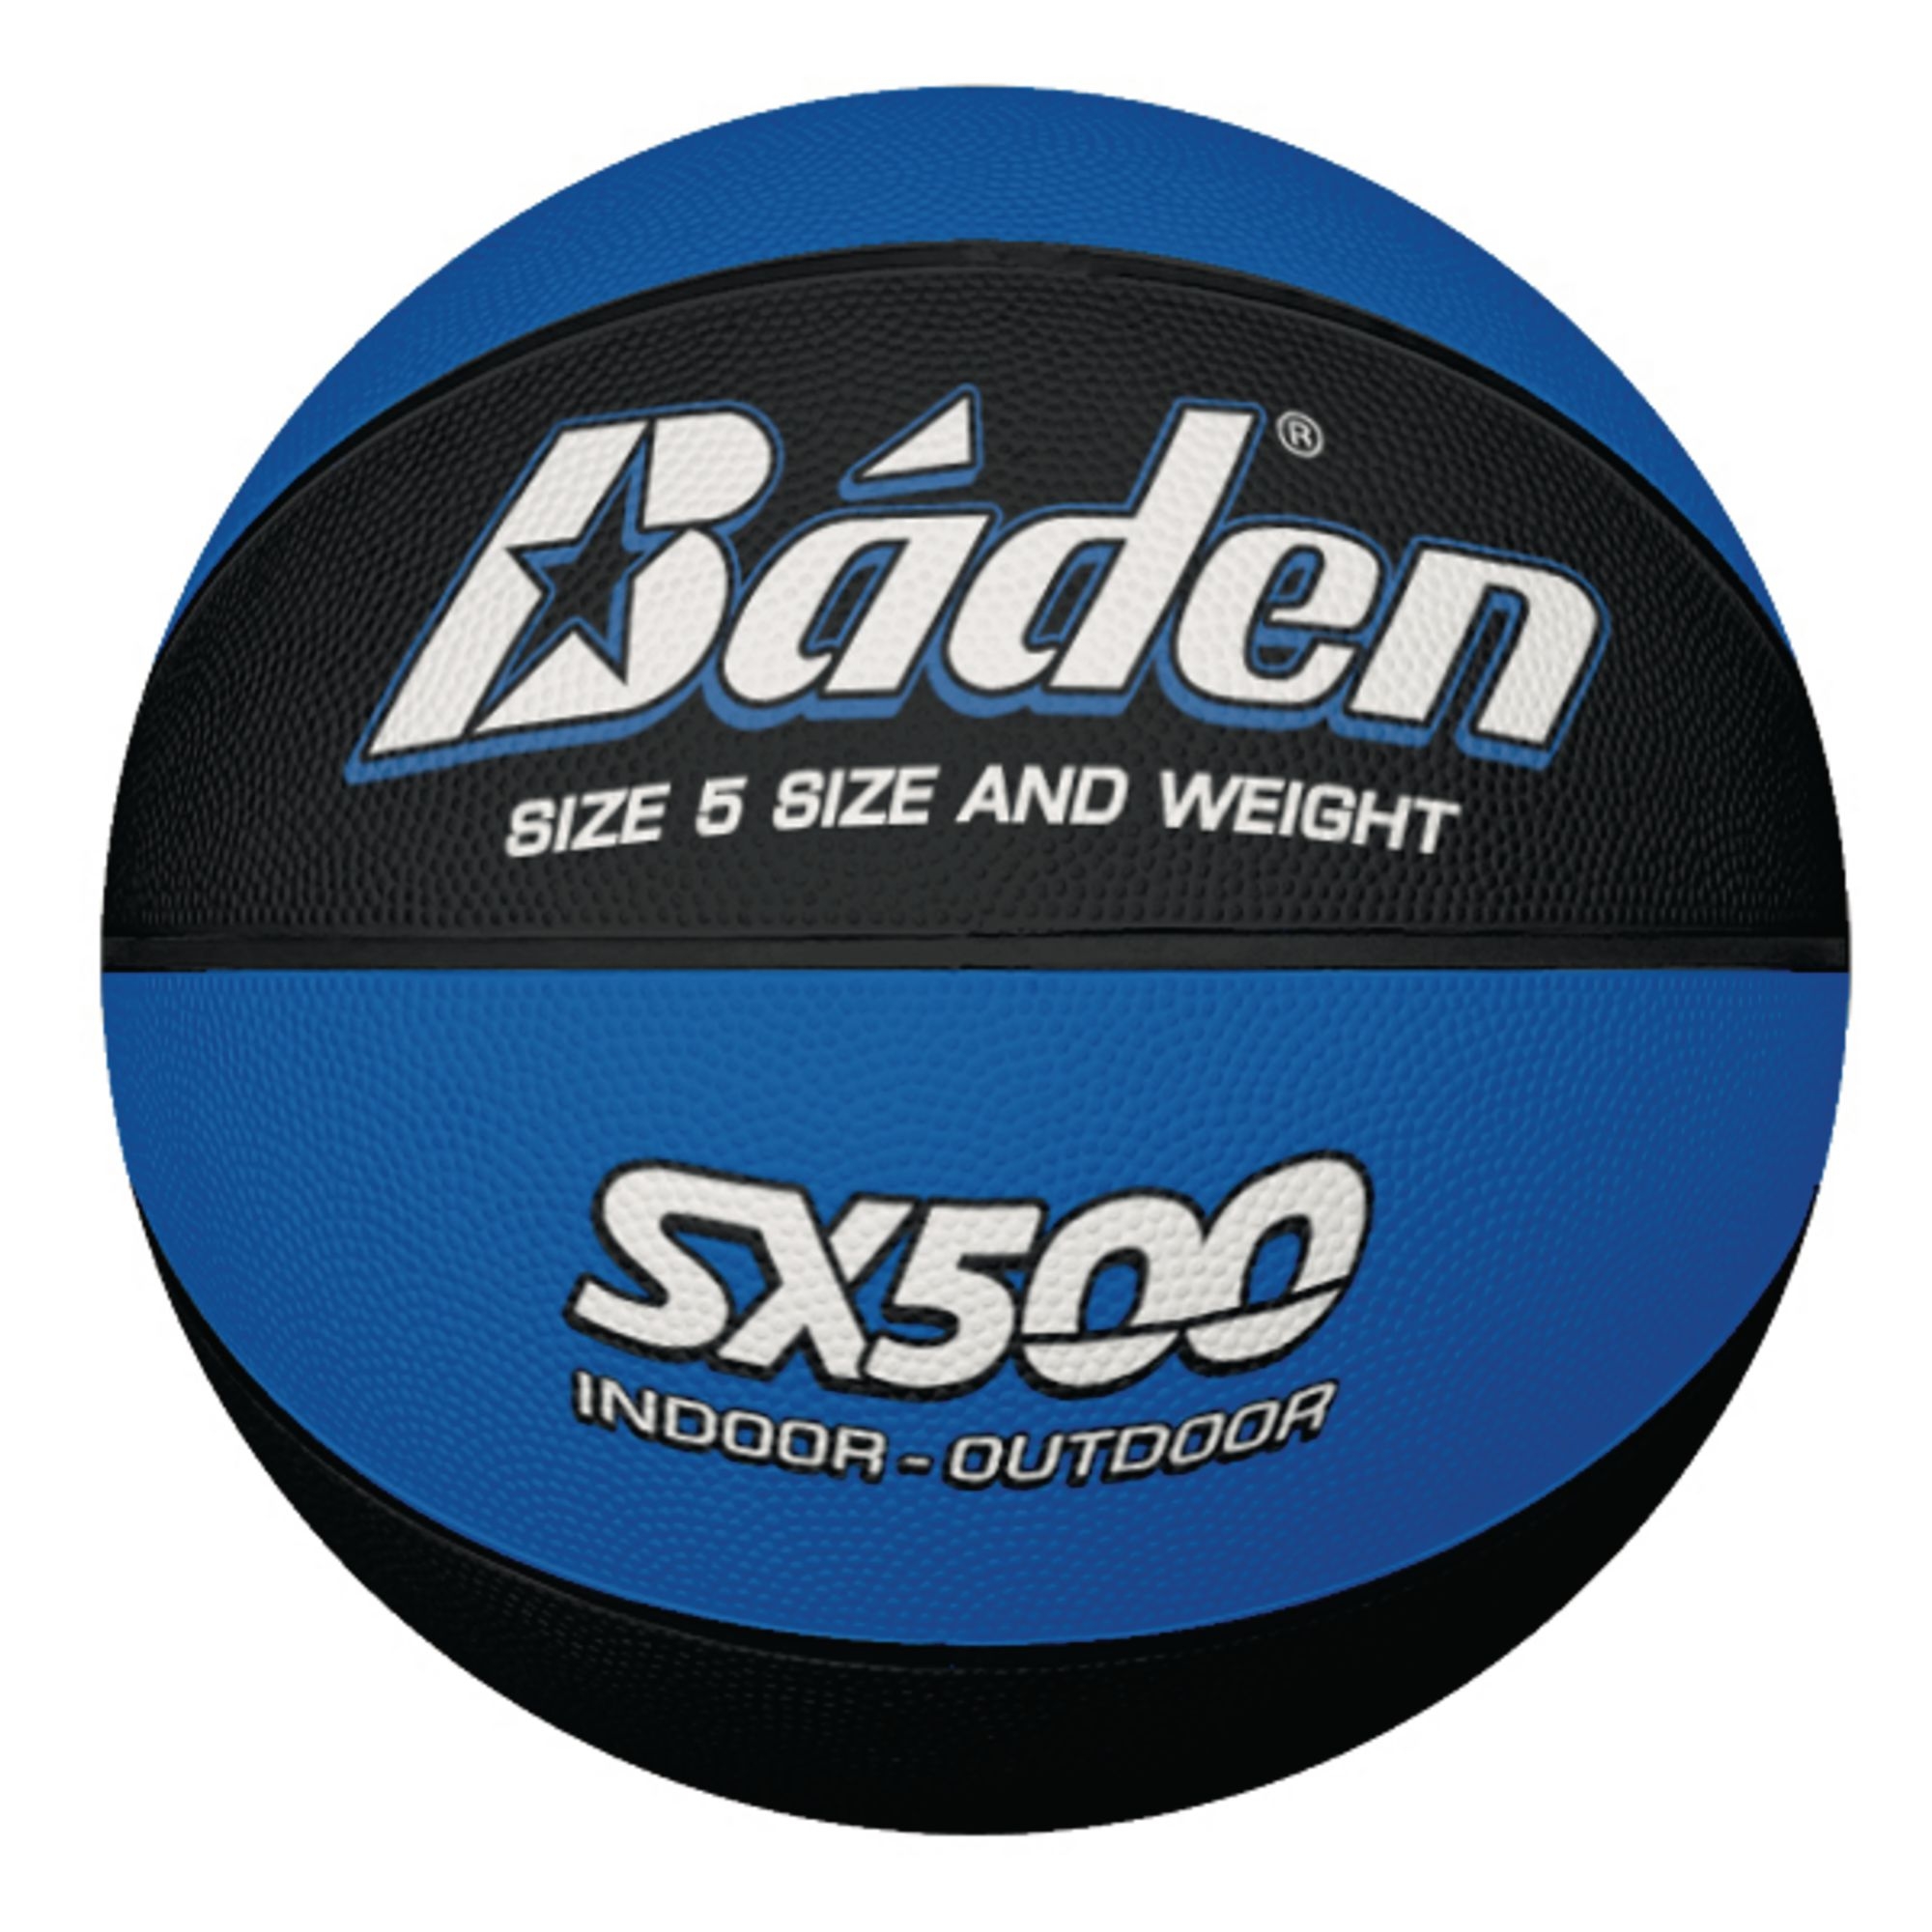 Baden SX500 Basketball - Size 5 - Blue/Black